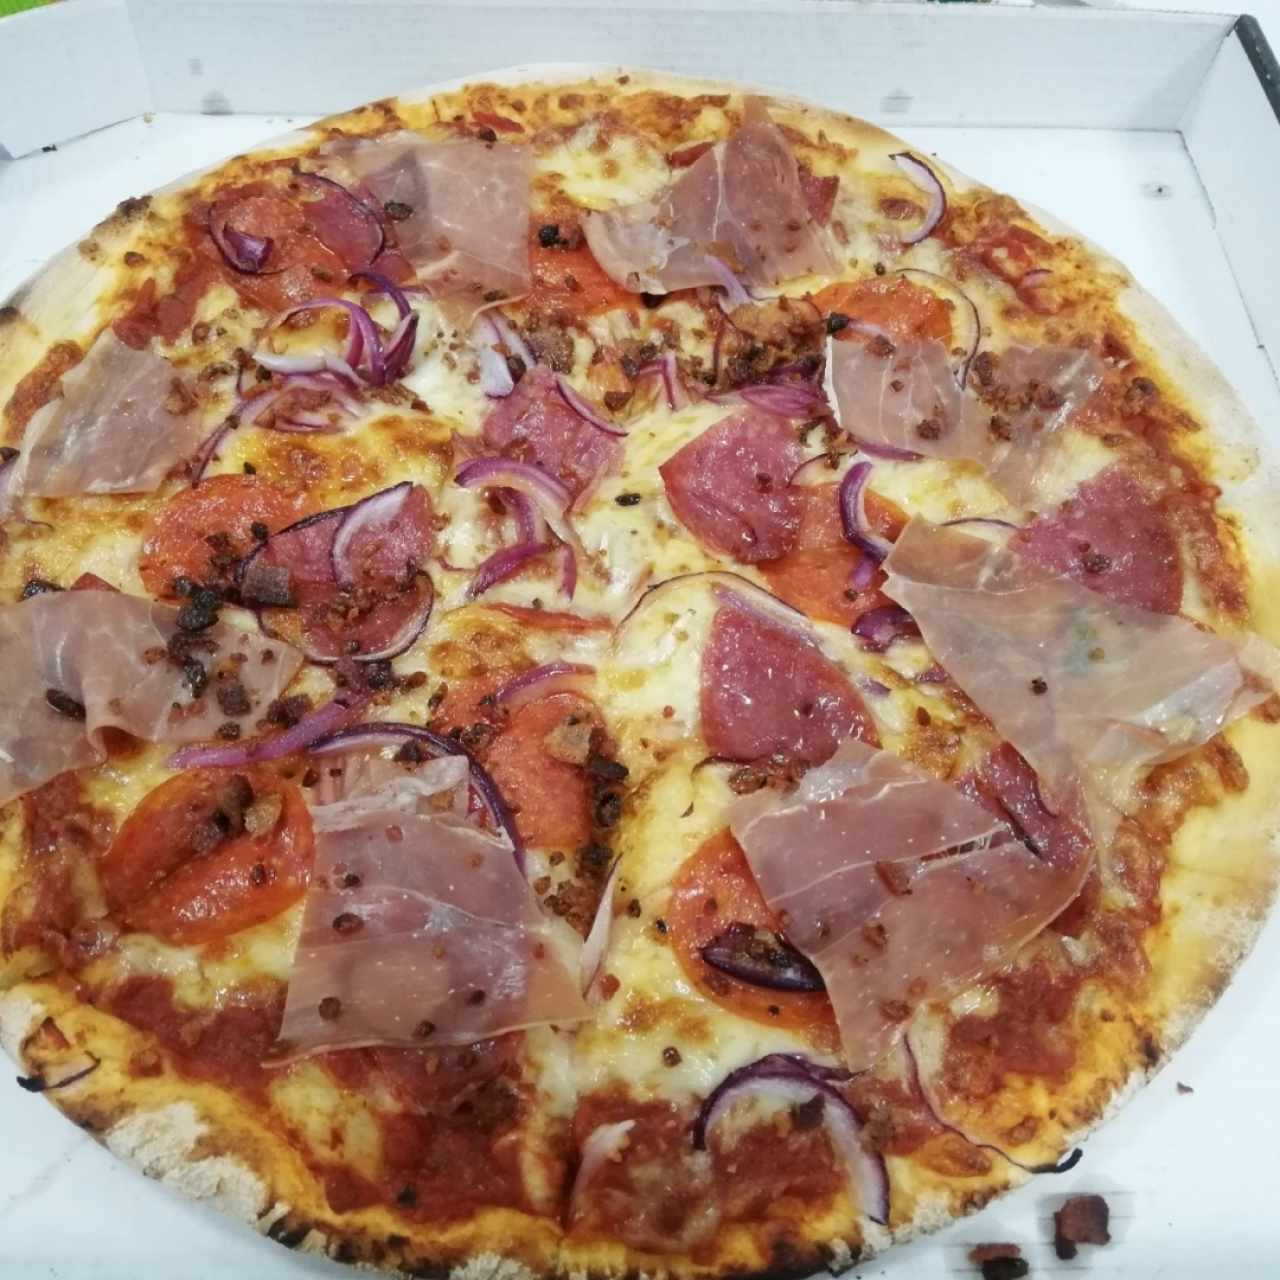 Pizza mixta pepperoni y jamón serrano